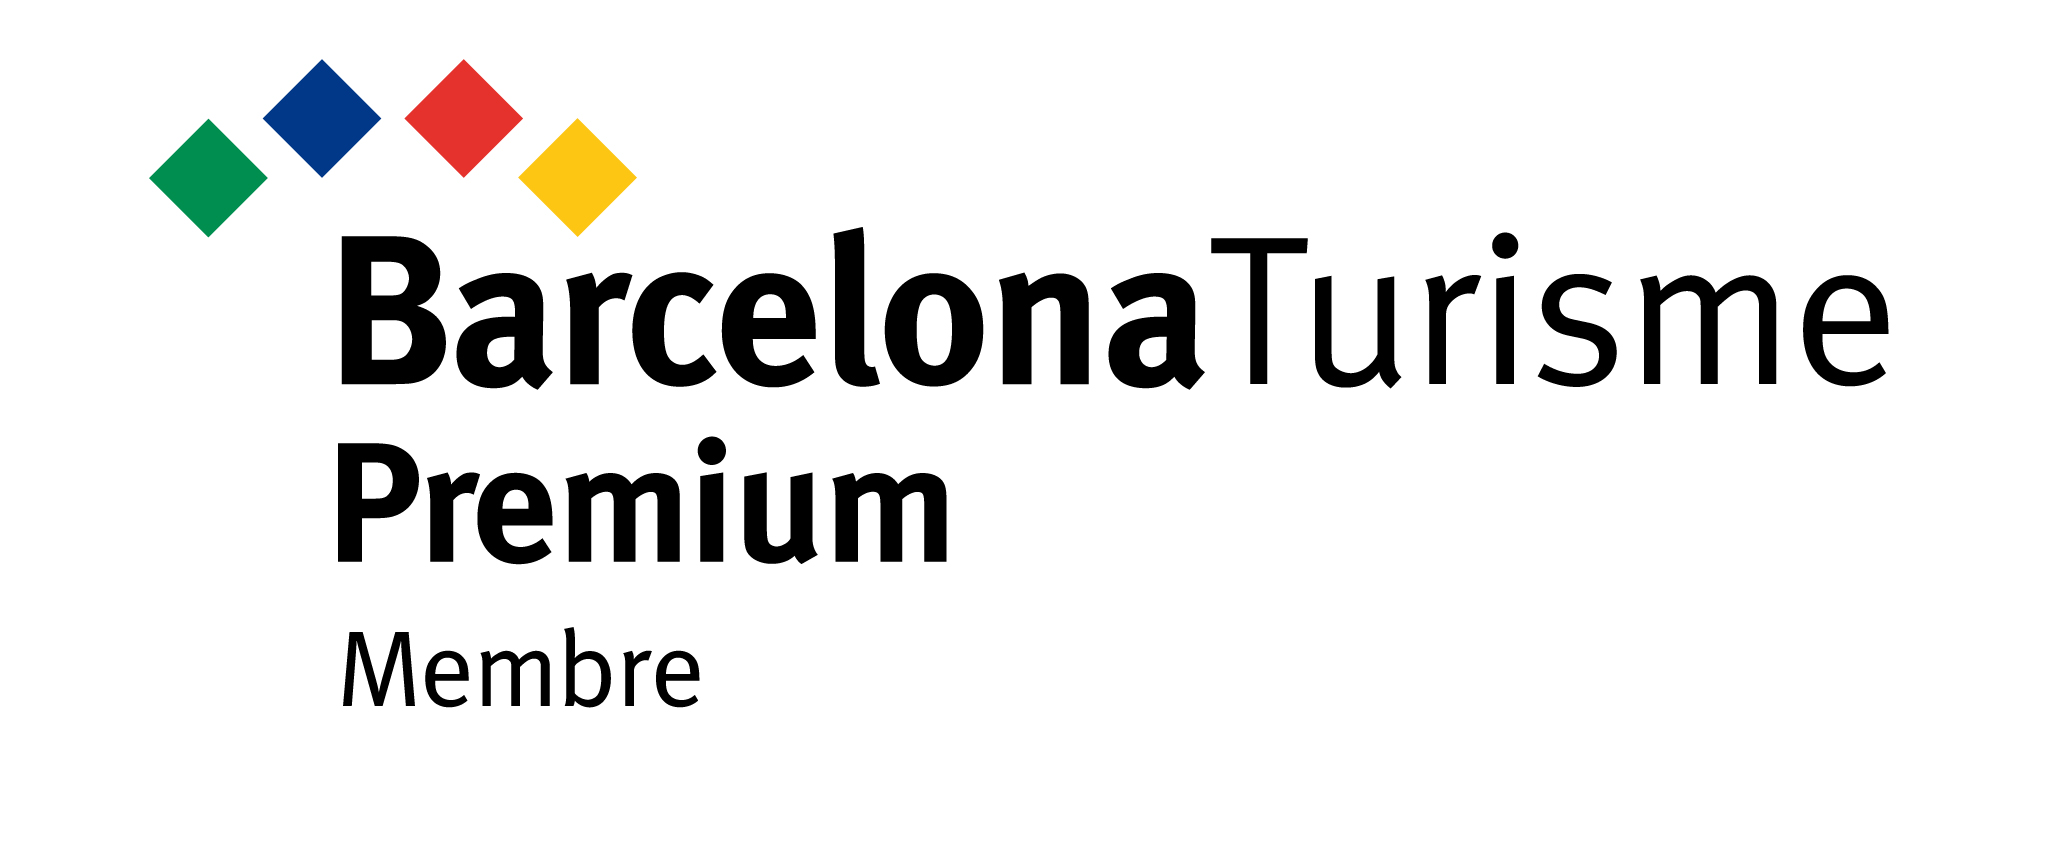 Barcelona Turisme Premium